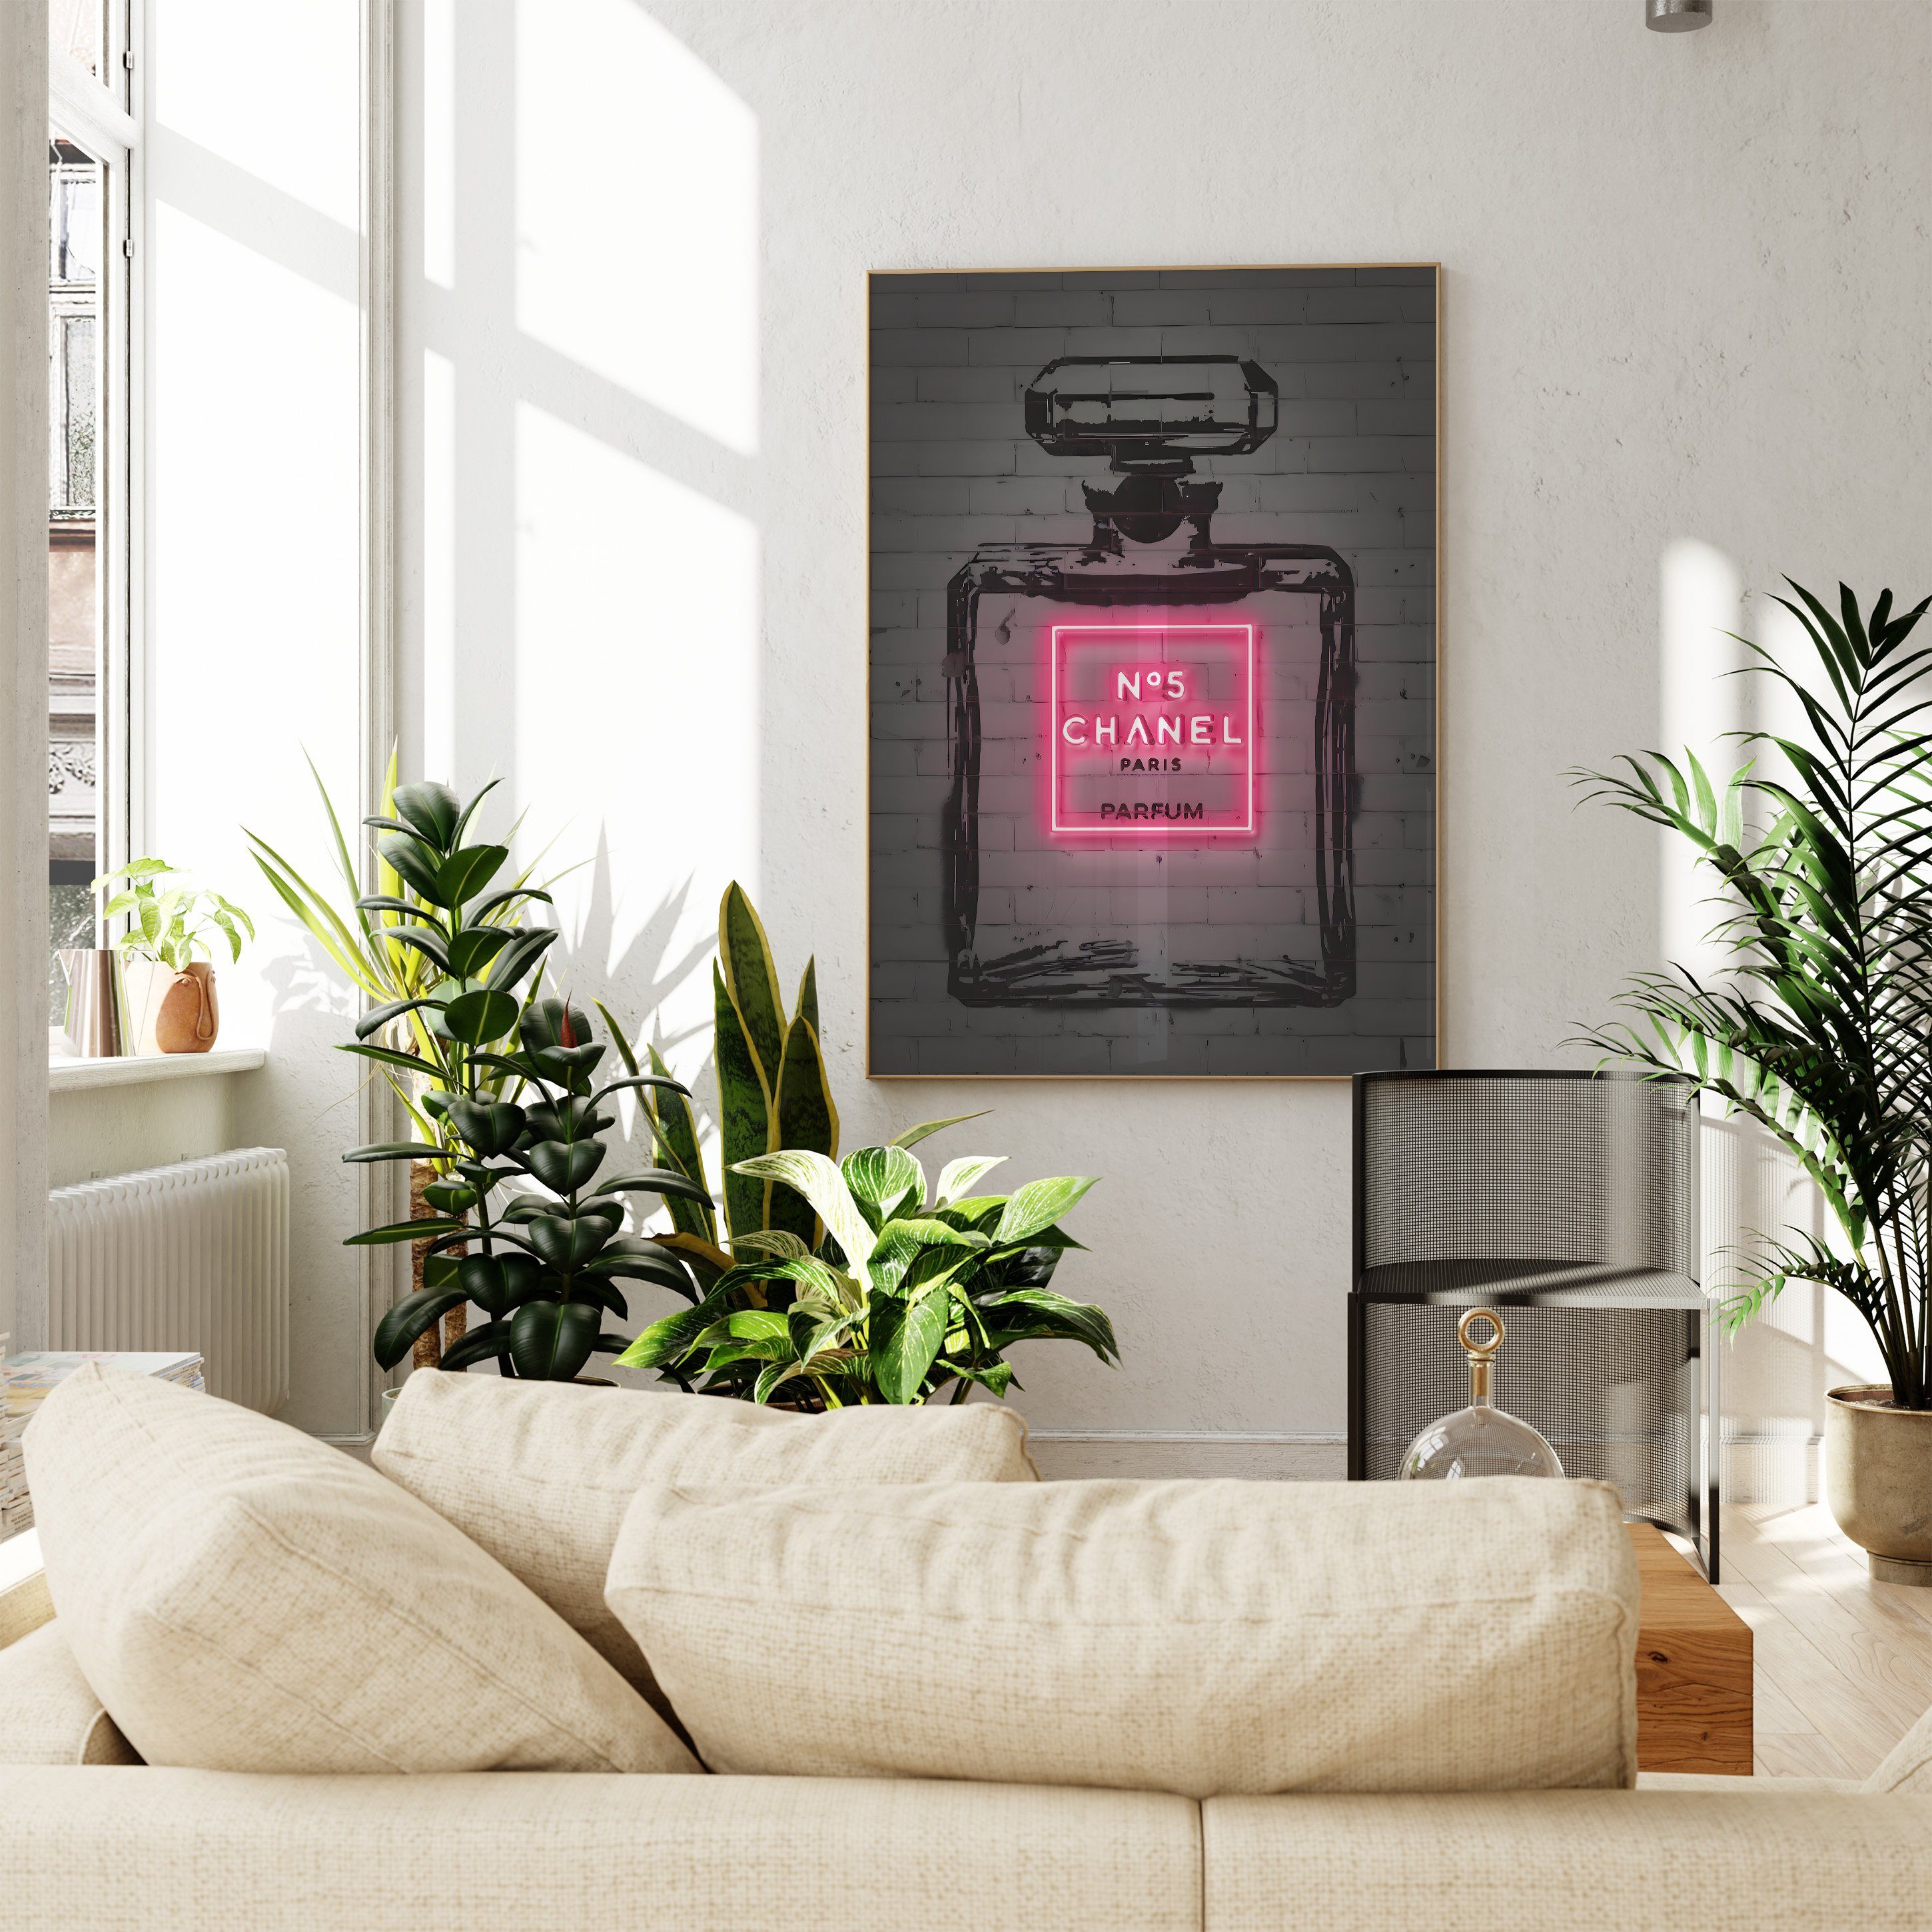 Chanel Effekt Neon JUSTGOODMOOD Poster Premium ® Poster No.5 · ohne Rahmen ·